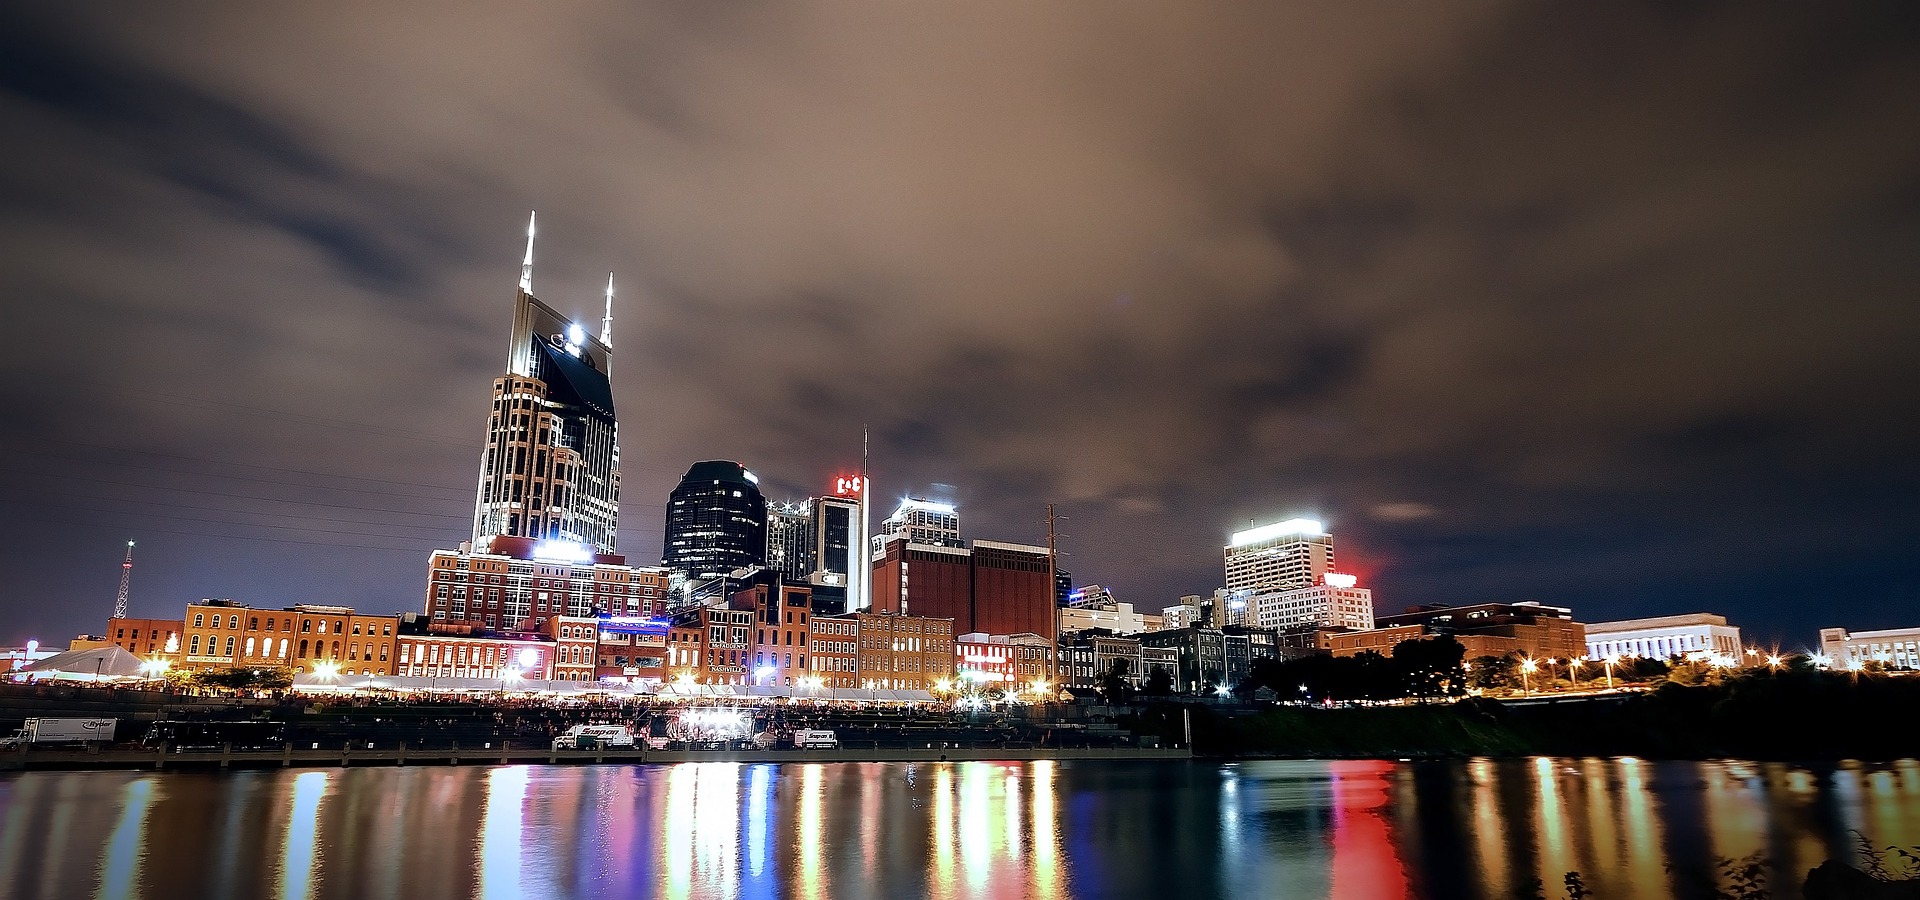 The Nashville Skyline